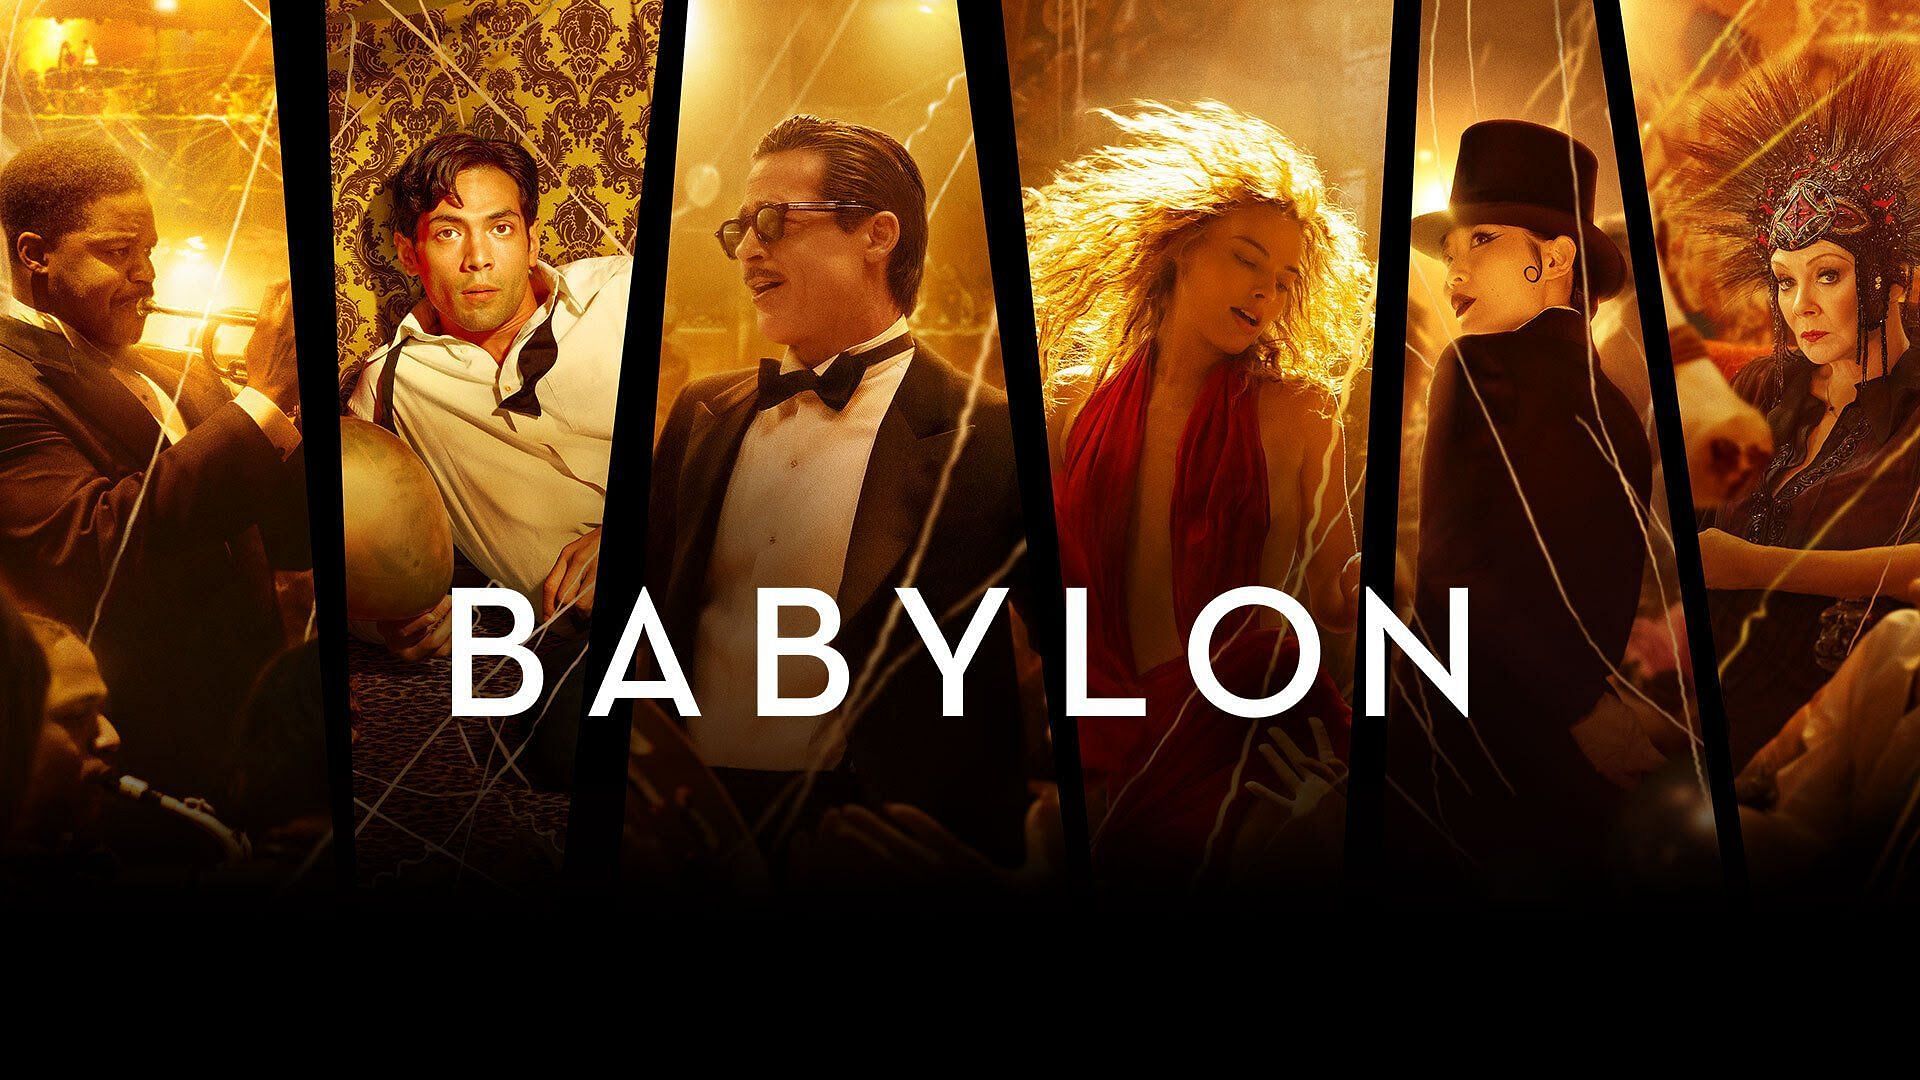 Babylon (Image via Paramount)